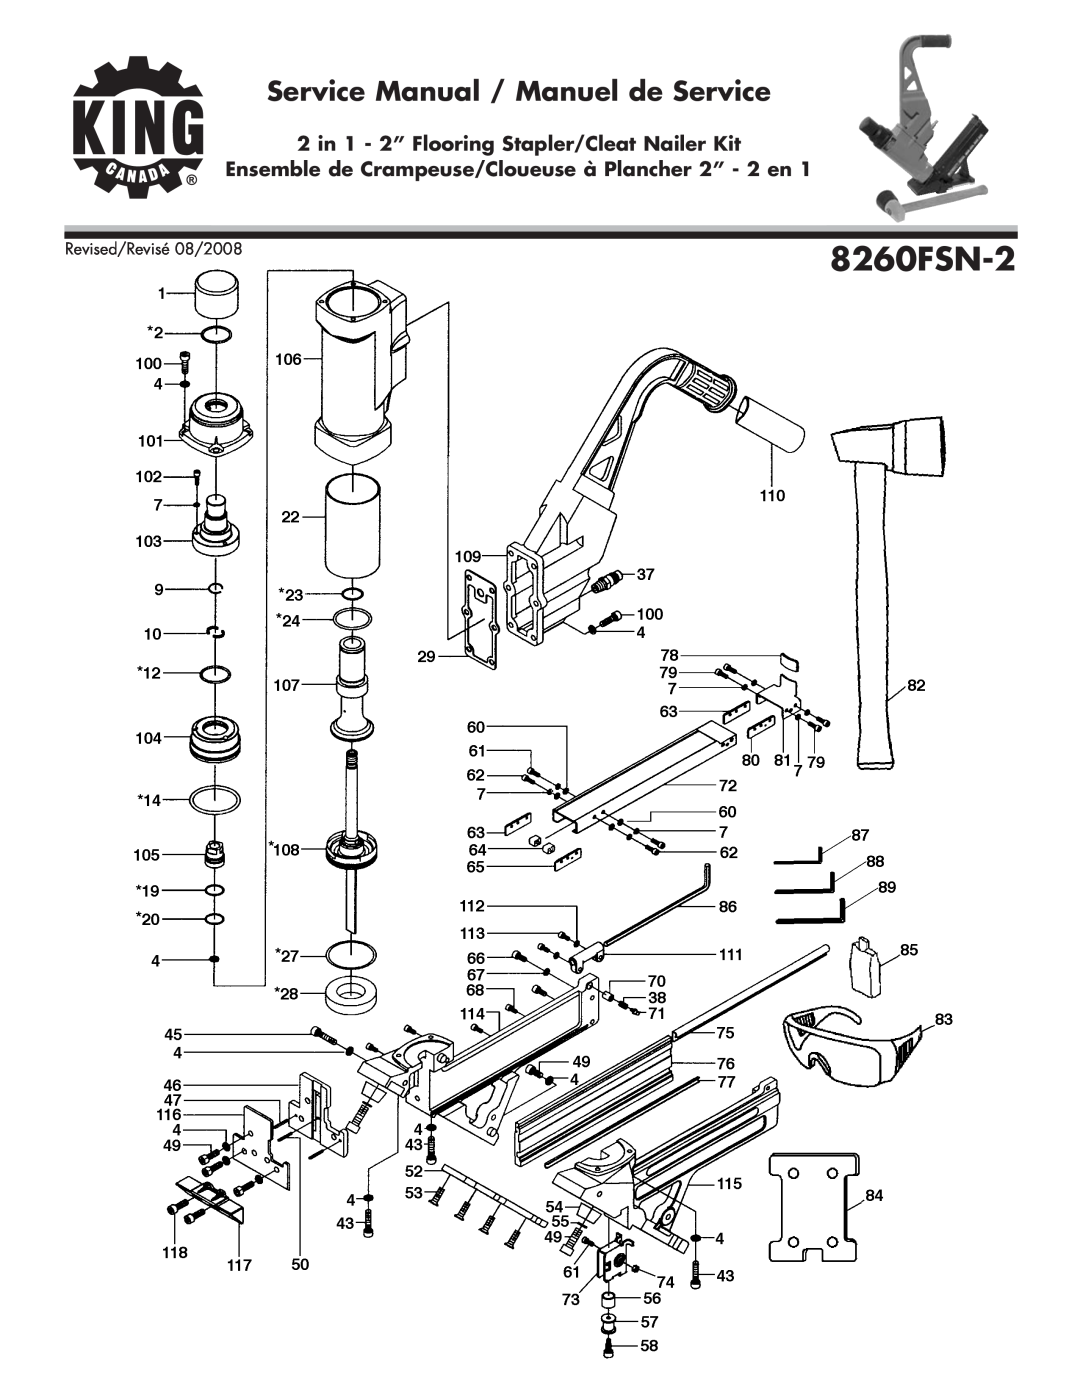 King Canada 8260FSN-2 service manual Service Manual / Manuel de Service, 2 in 1 - 2” Flooring Stapler/Cleat Nailer Kit 